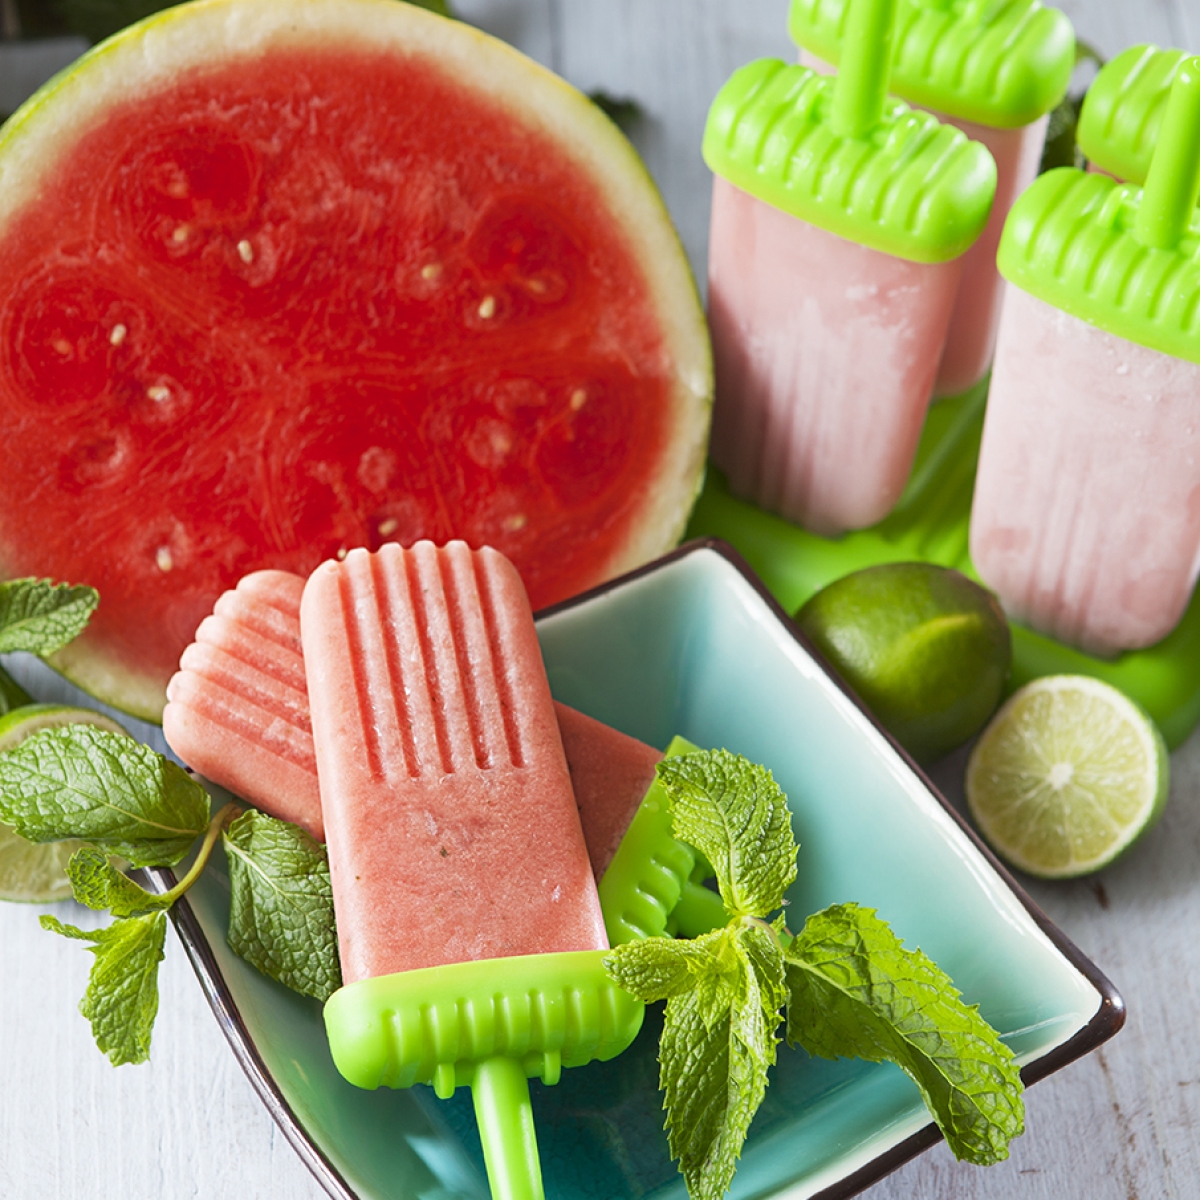 waikiki kickers frozen treat and watermelon